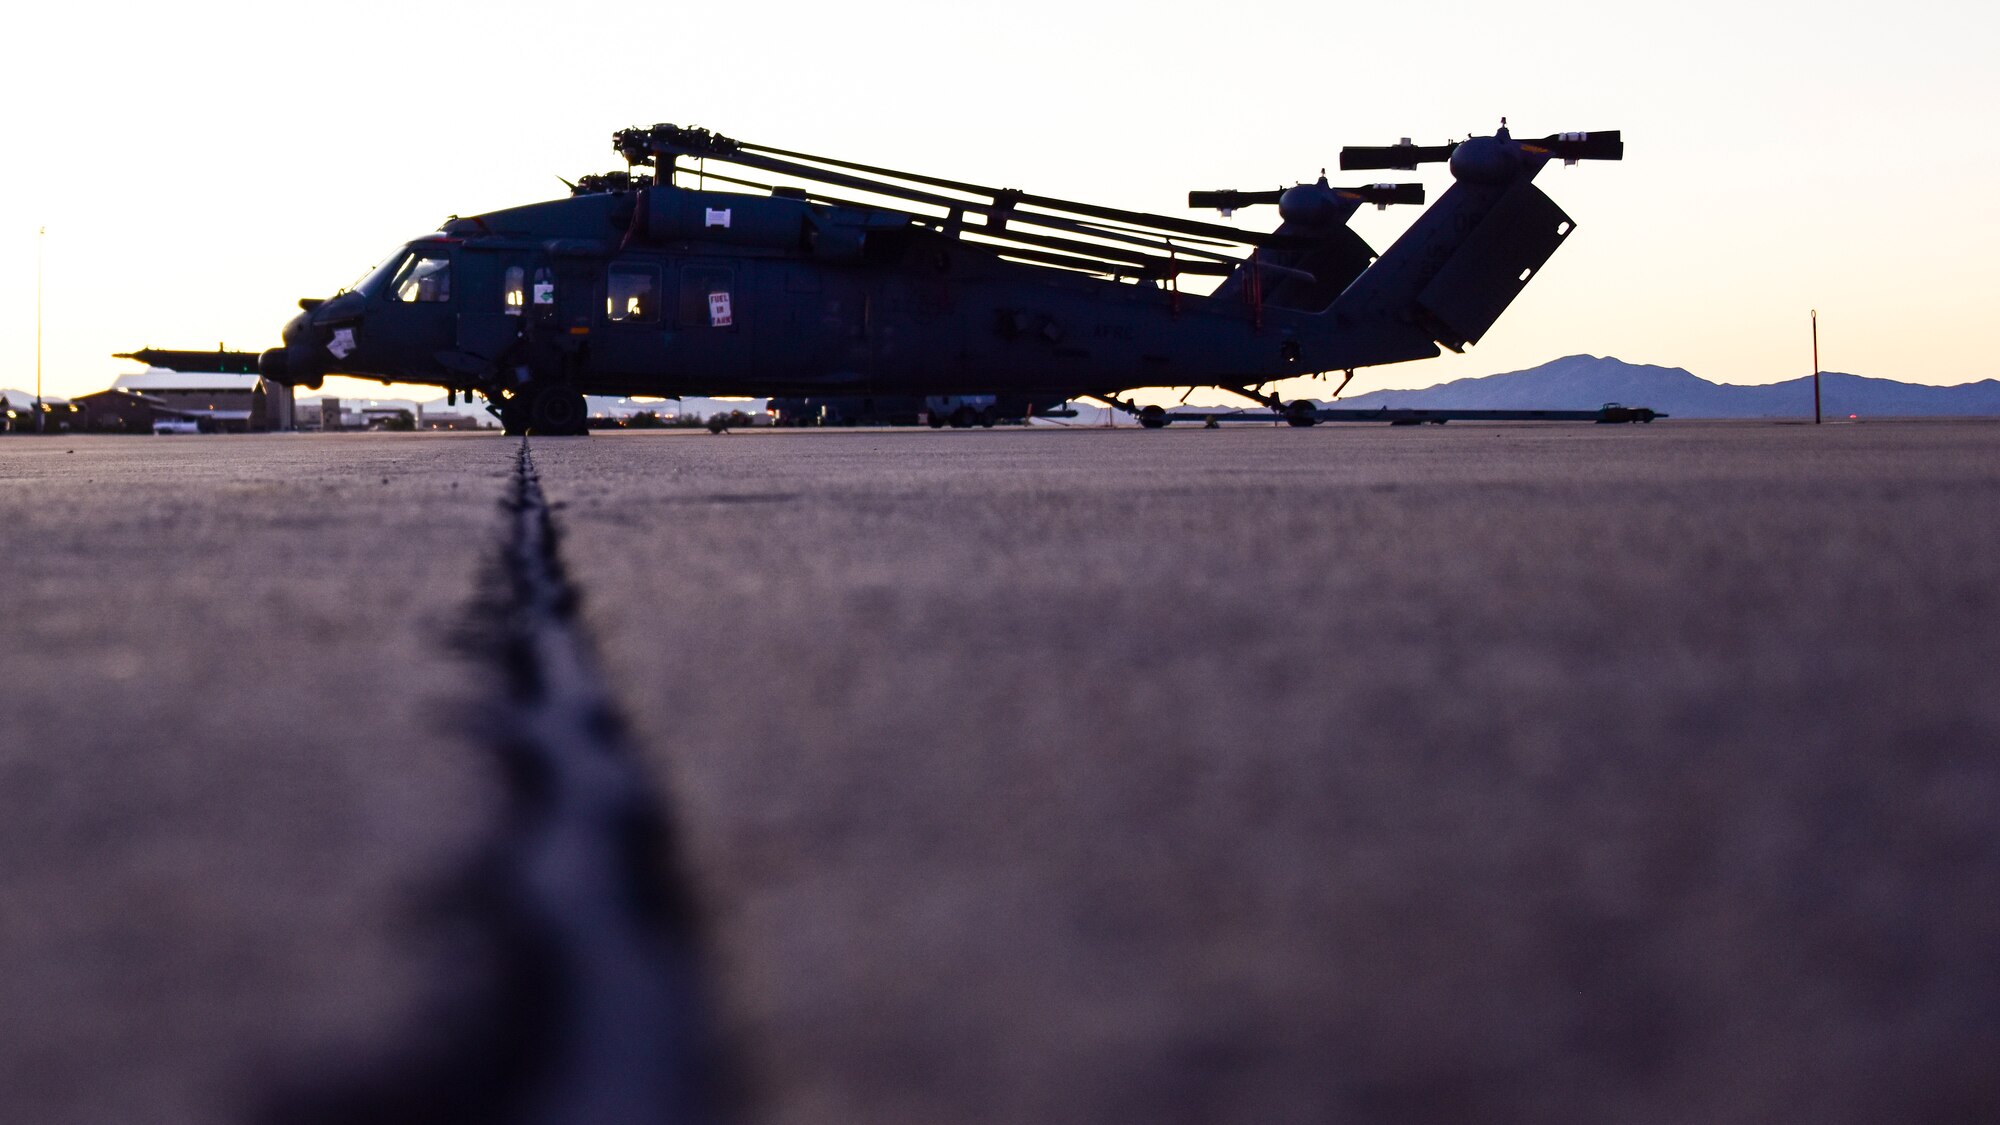 HH-60G Pave Hawks sit on flight line